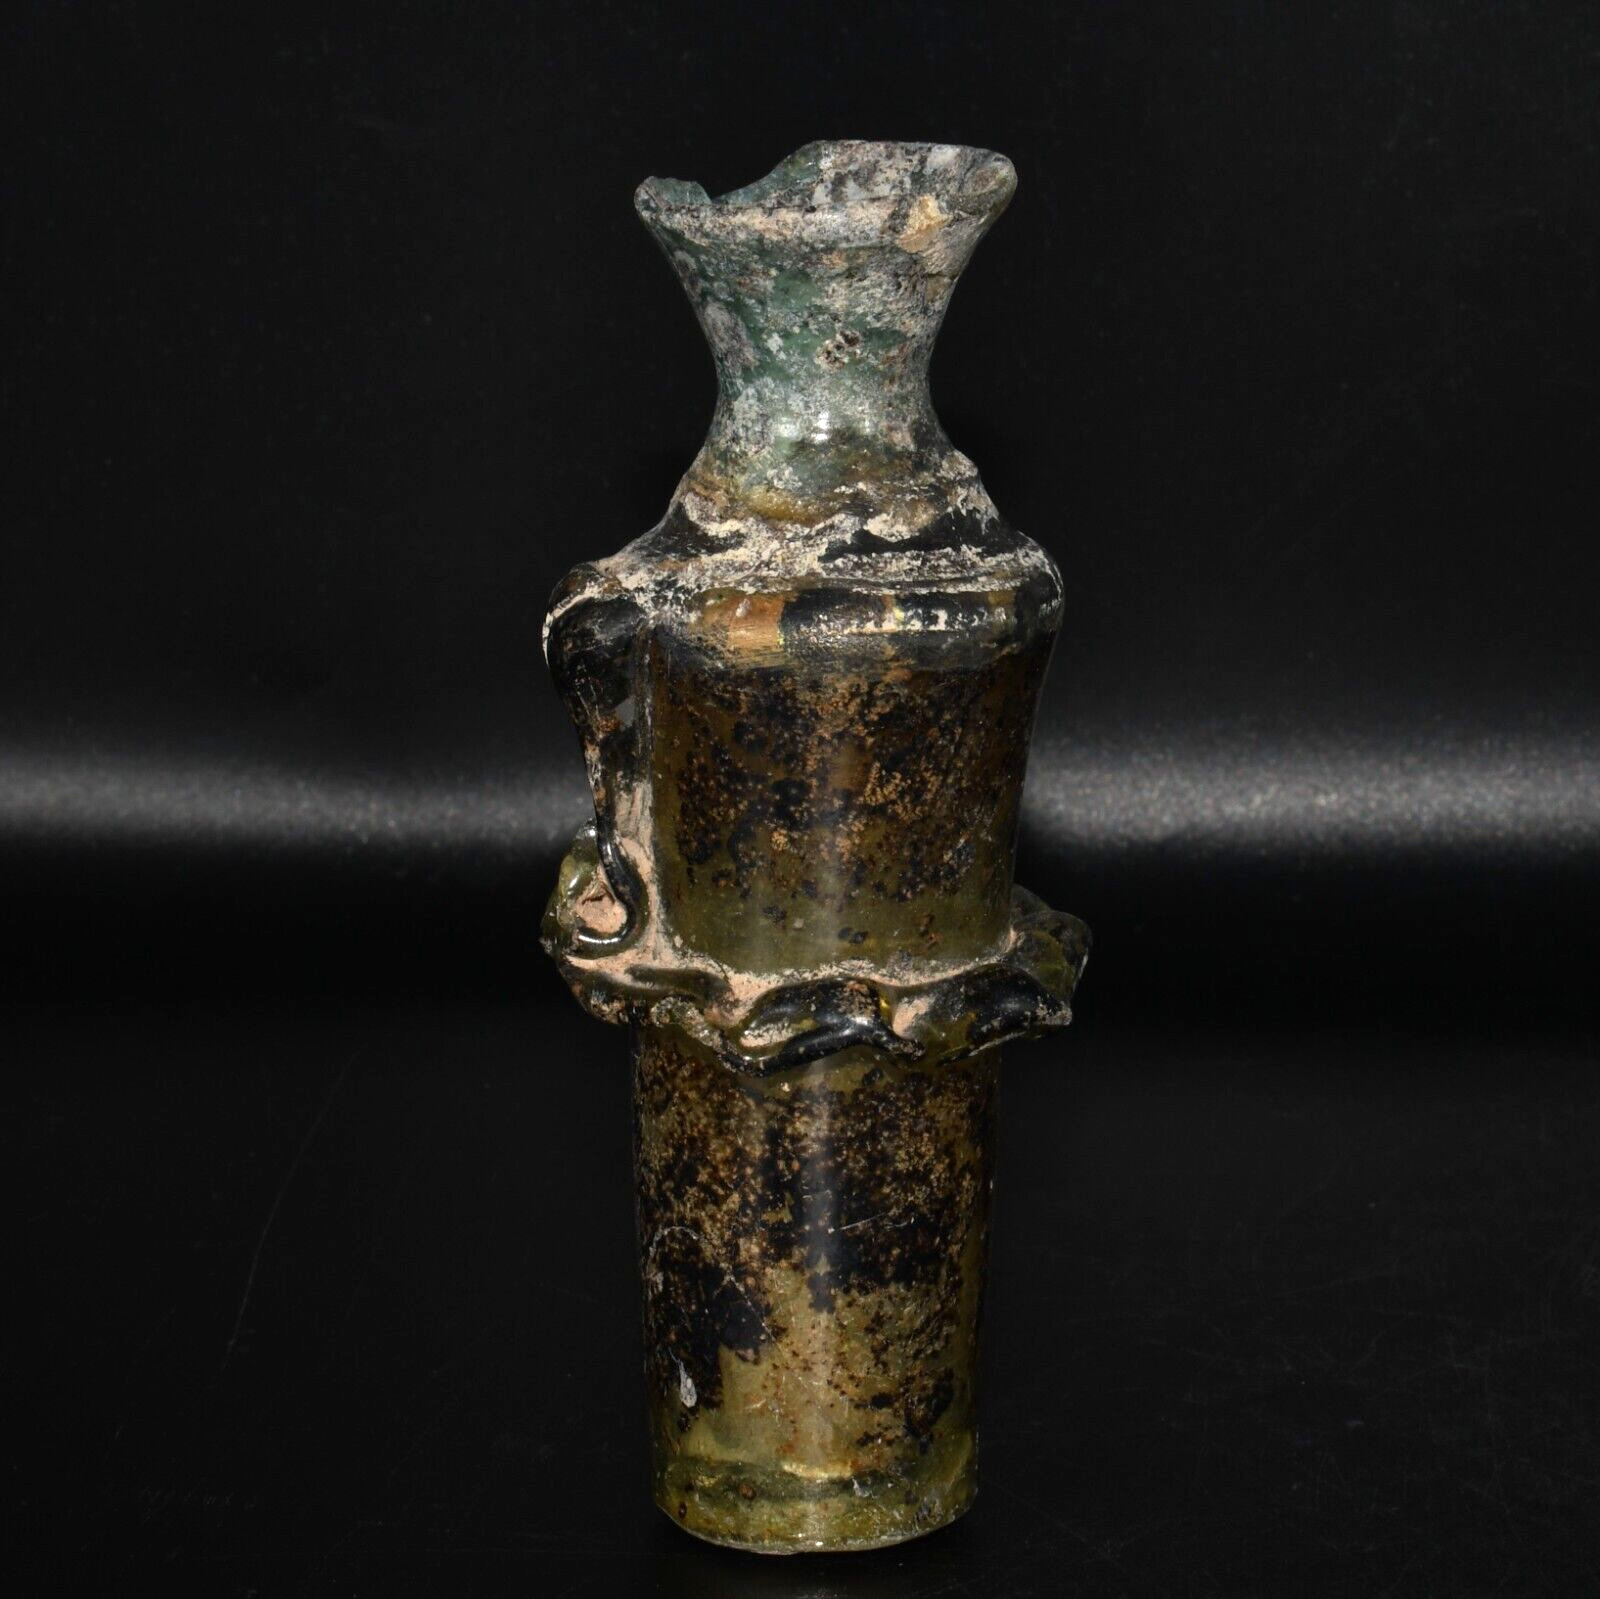 Large Rare Ancient Decorated Roman Glass Perfume Bottle Vessel C. 4th Century AD